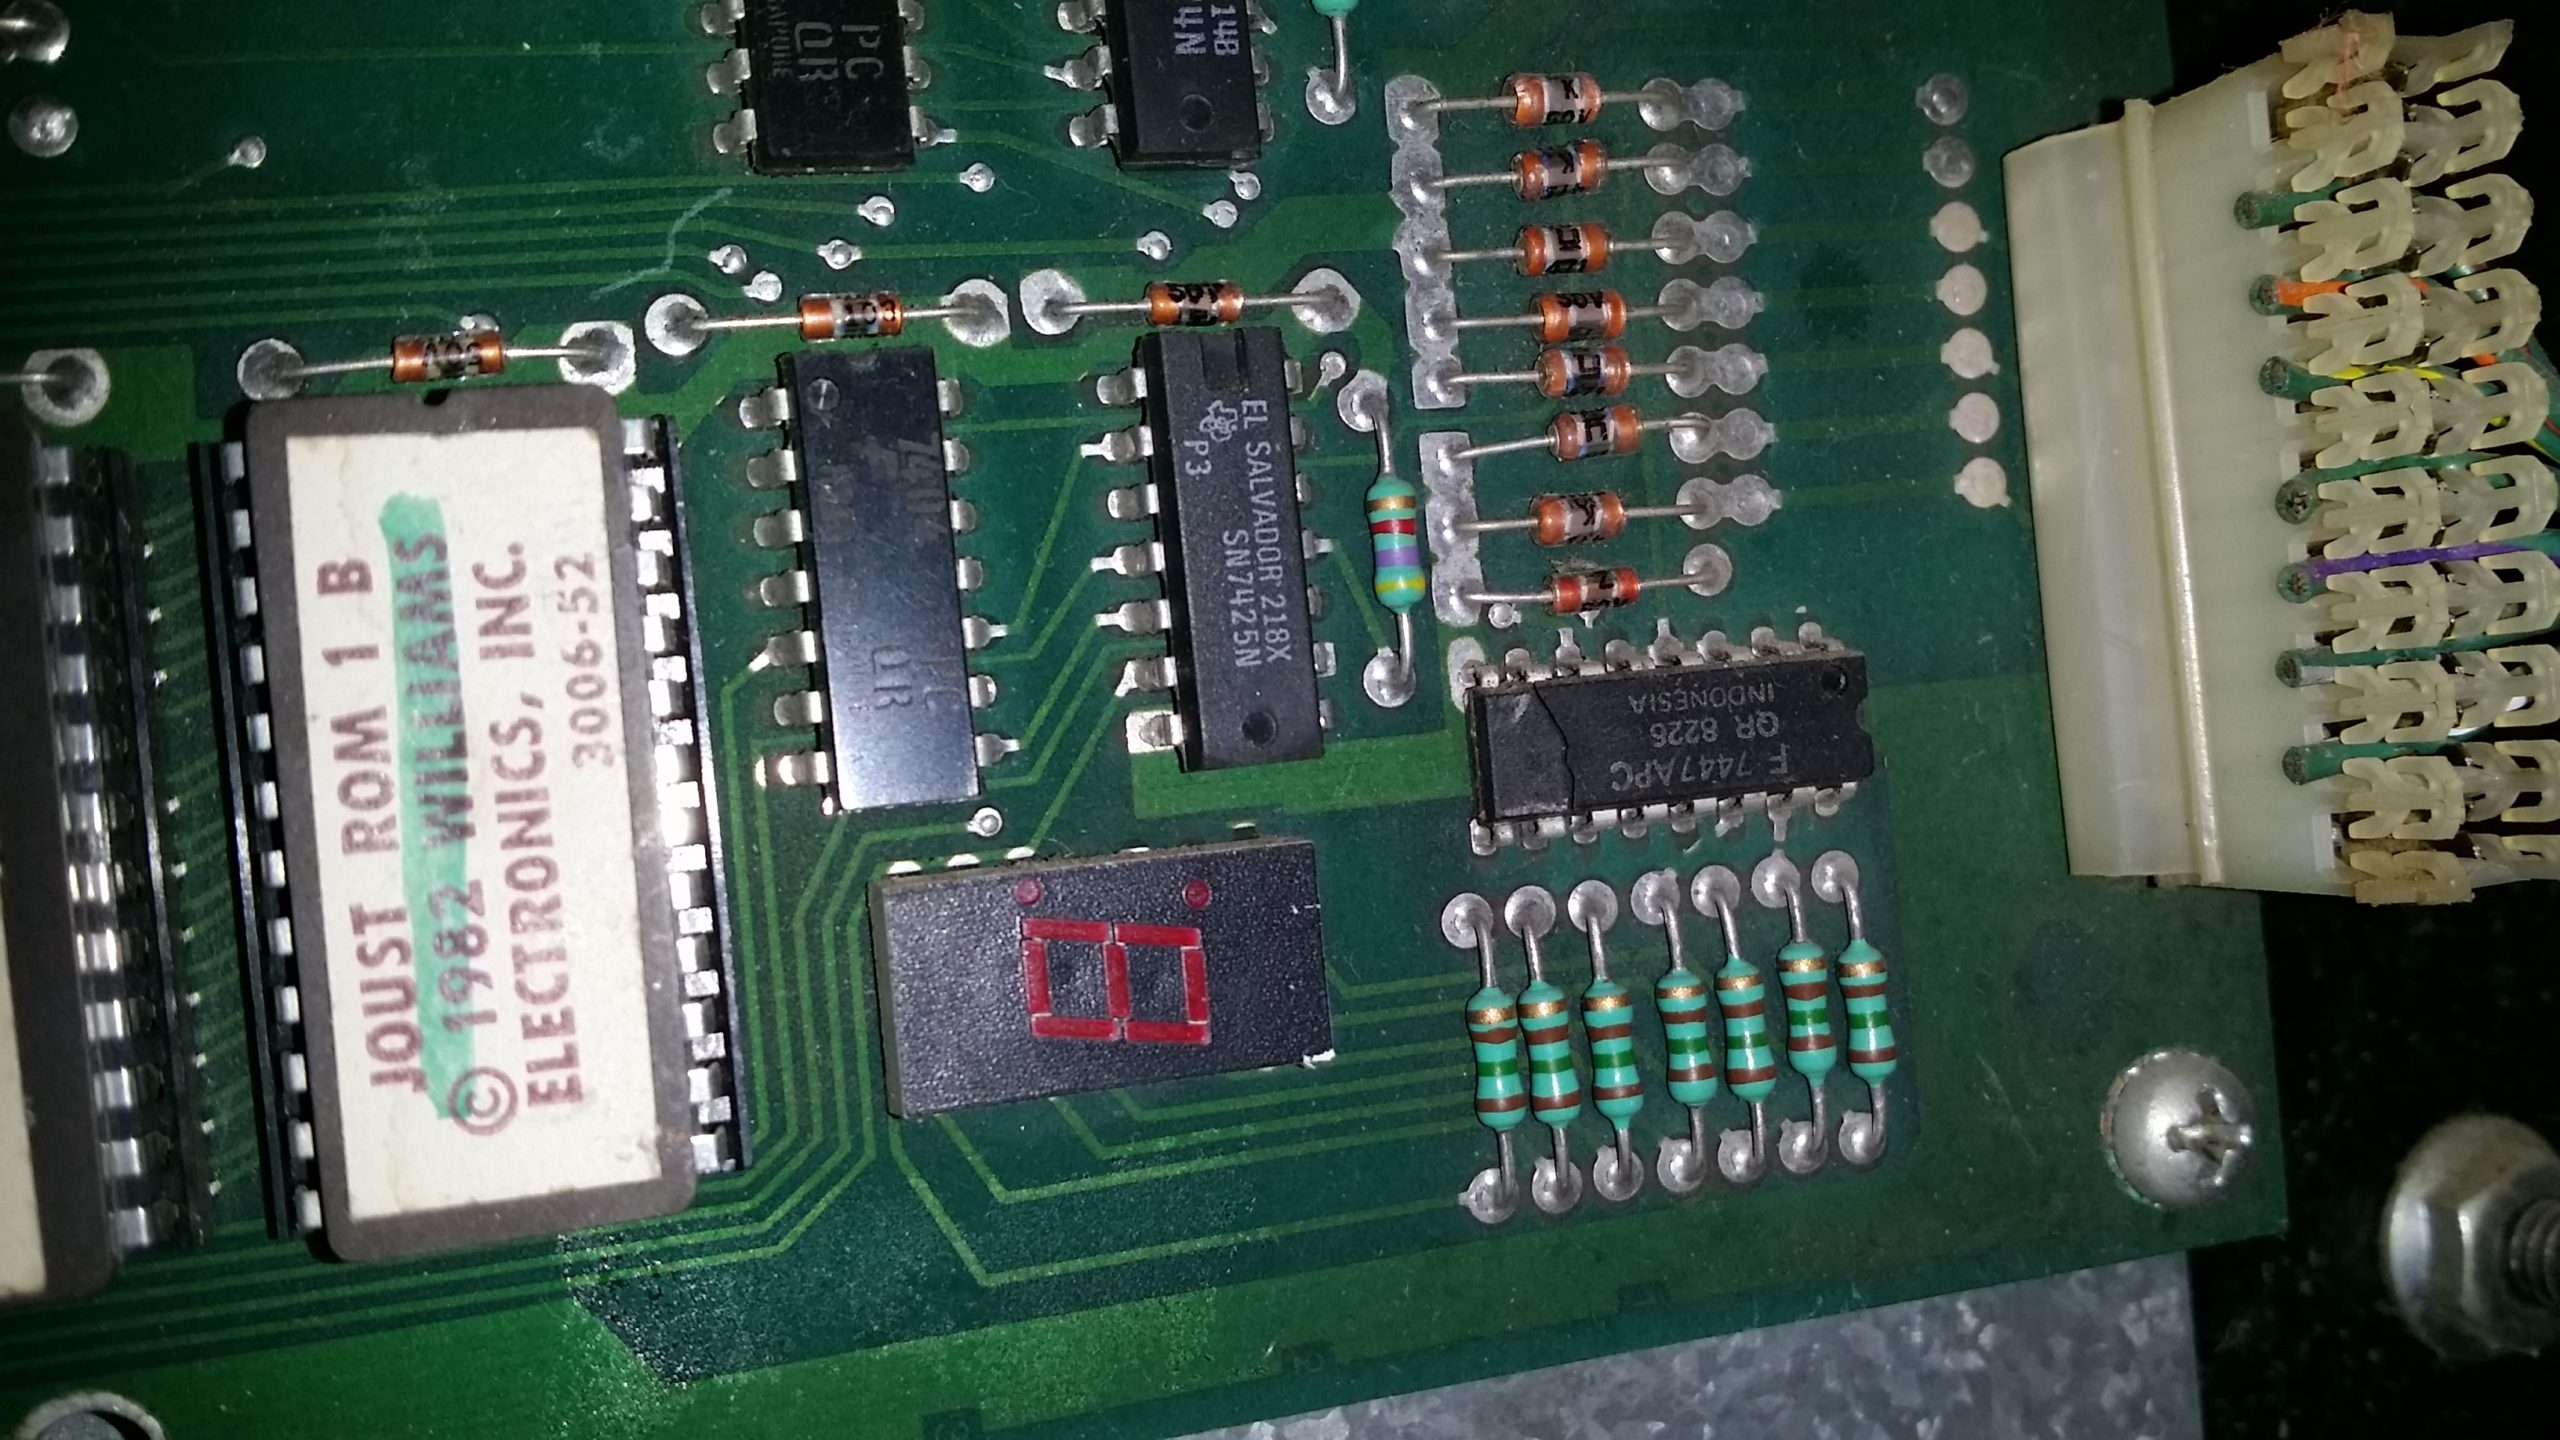 Joust ROM board with broken flip-flop chip